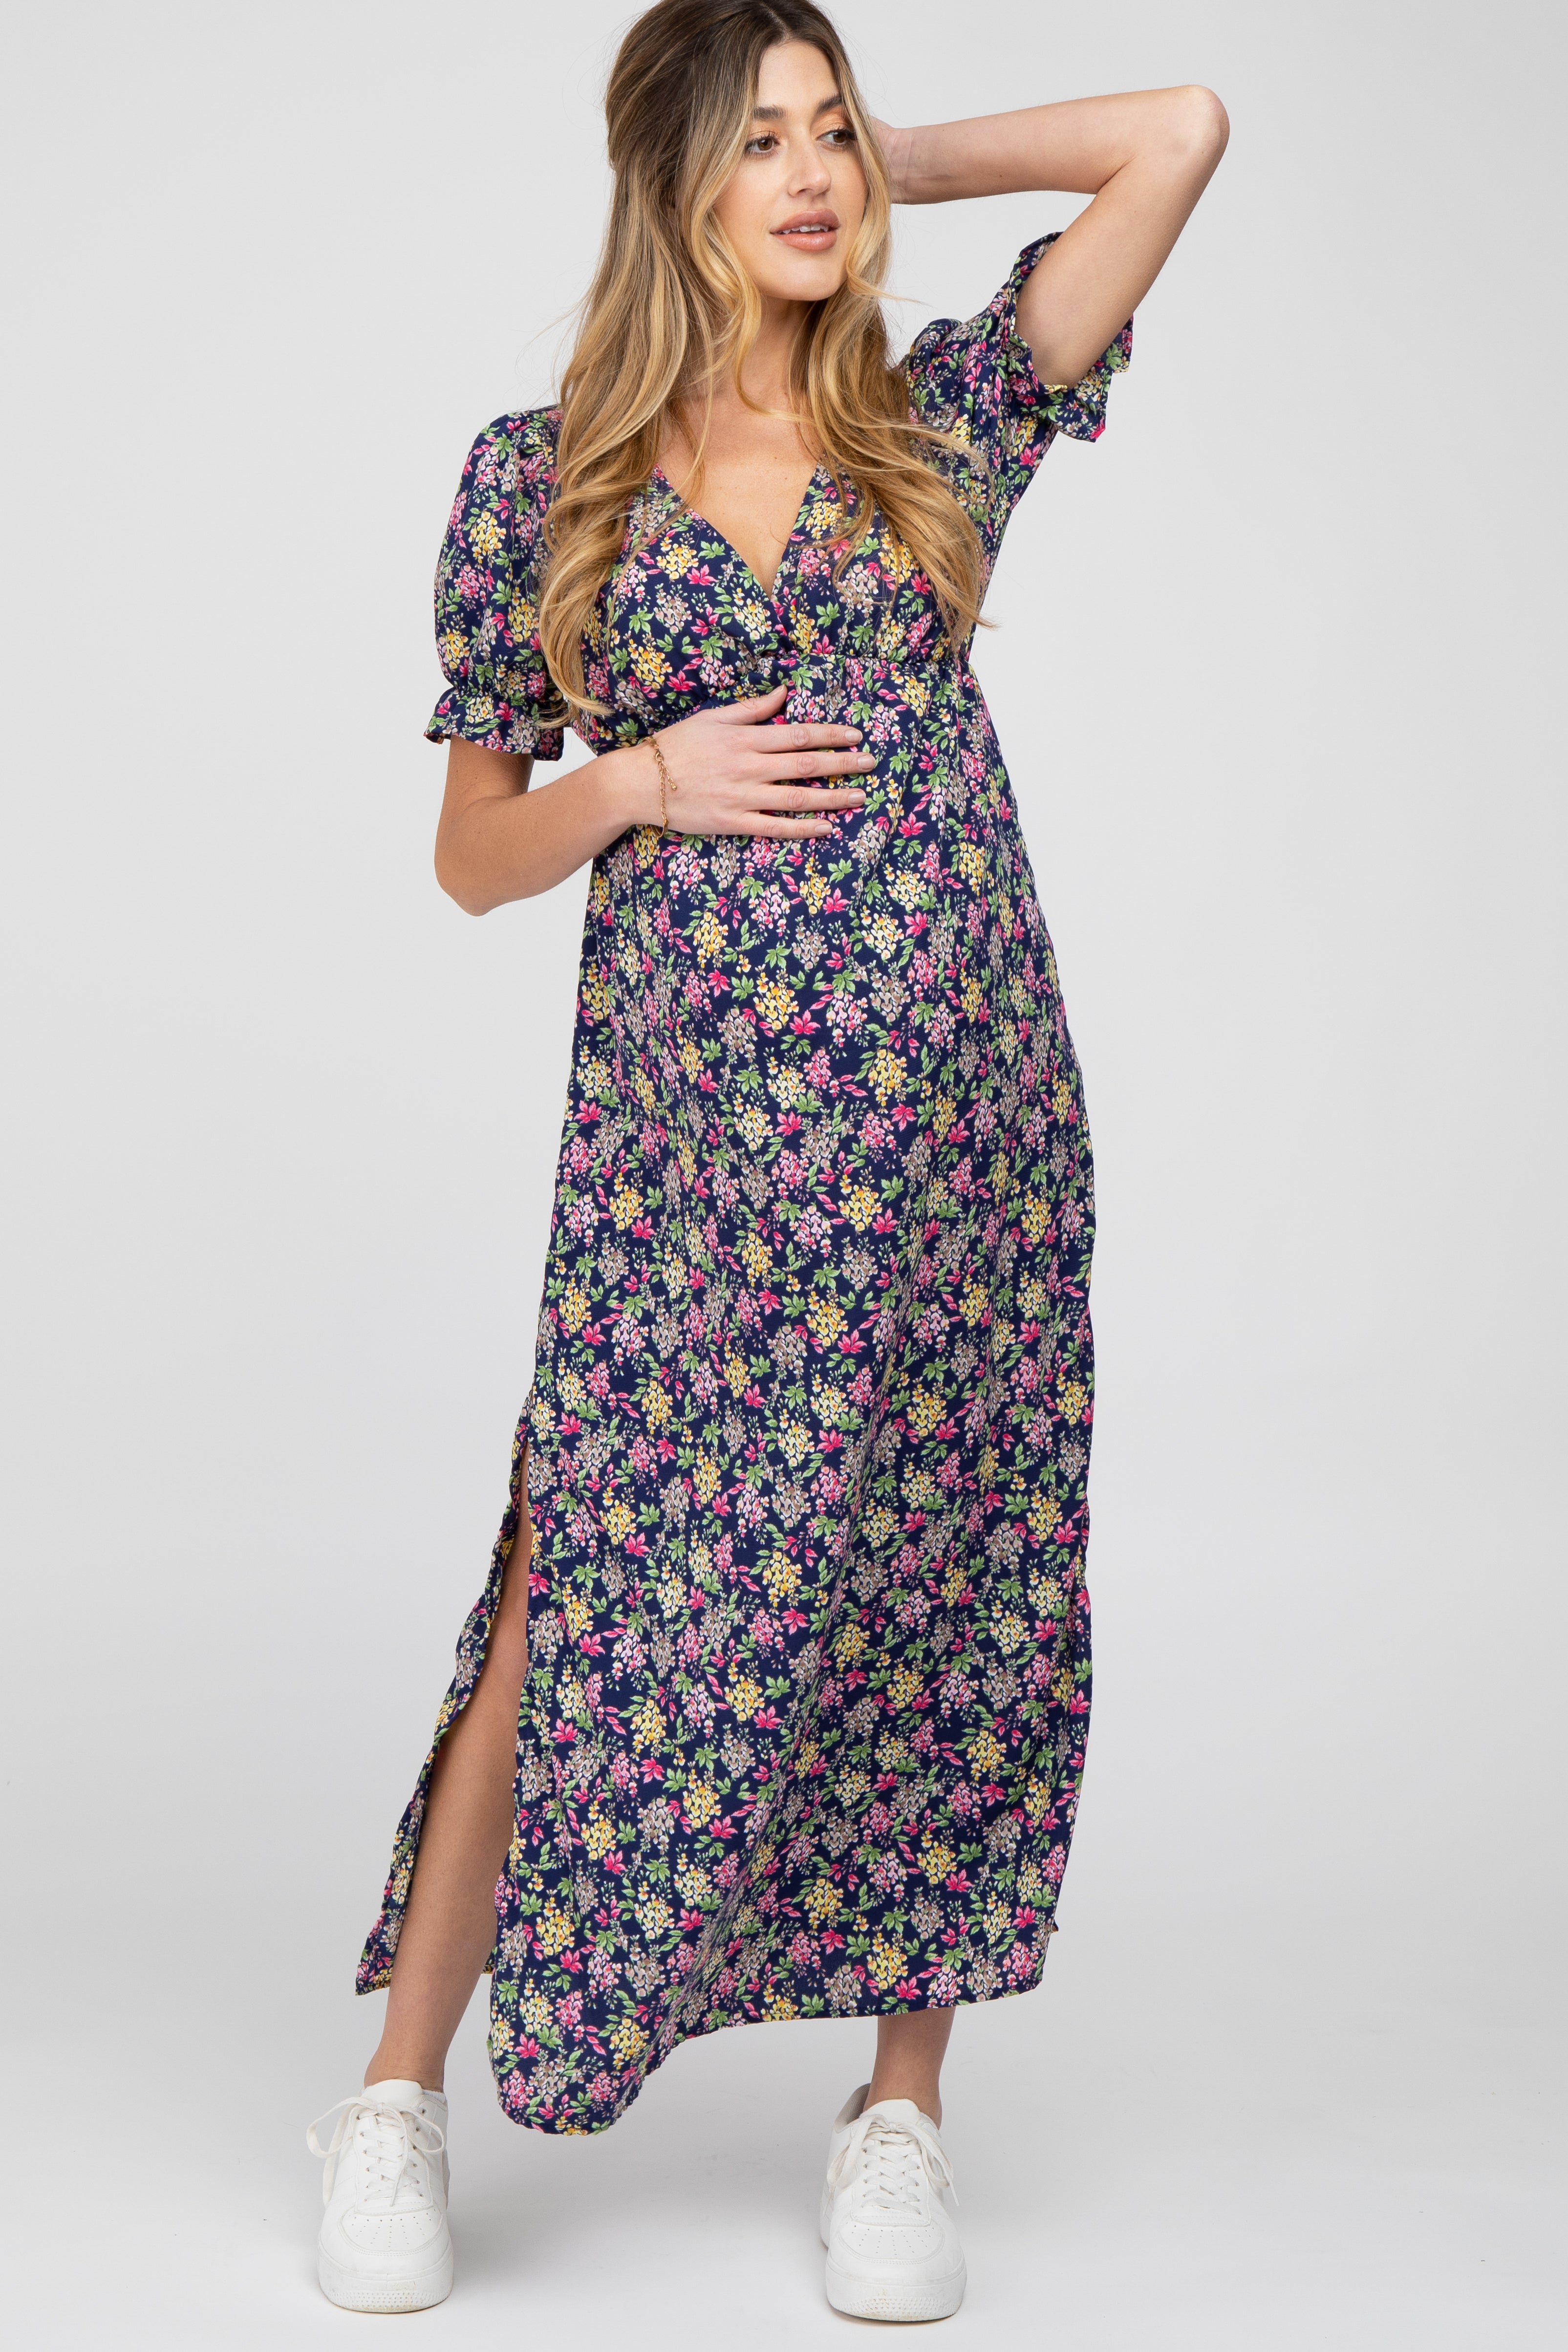 Navy Blue Floral Side Slit Maternity Maxi Dress– PinkBlush